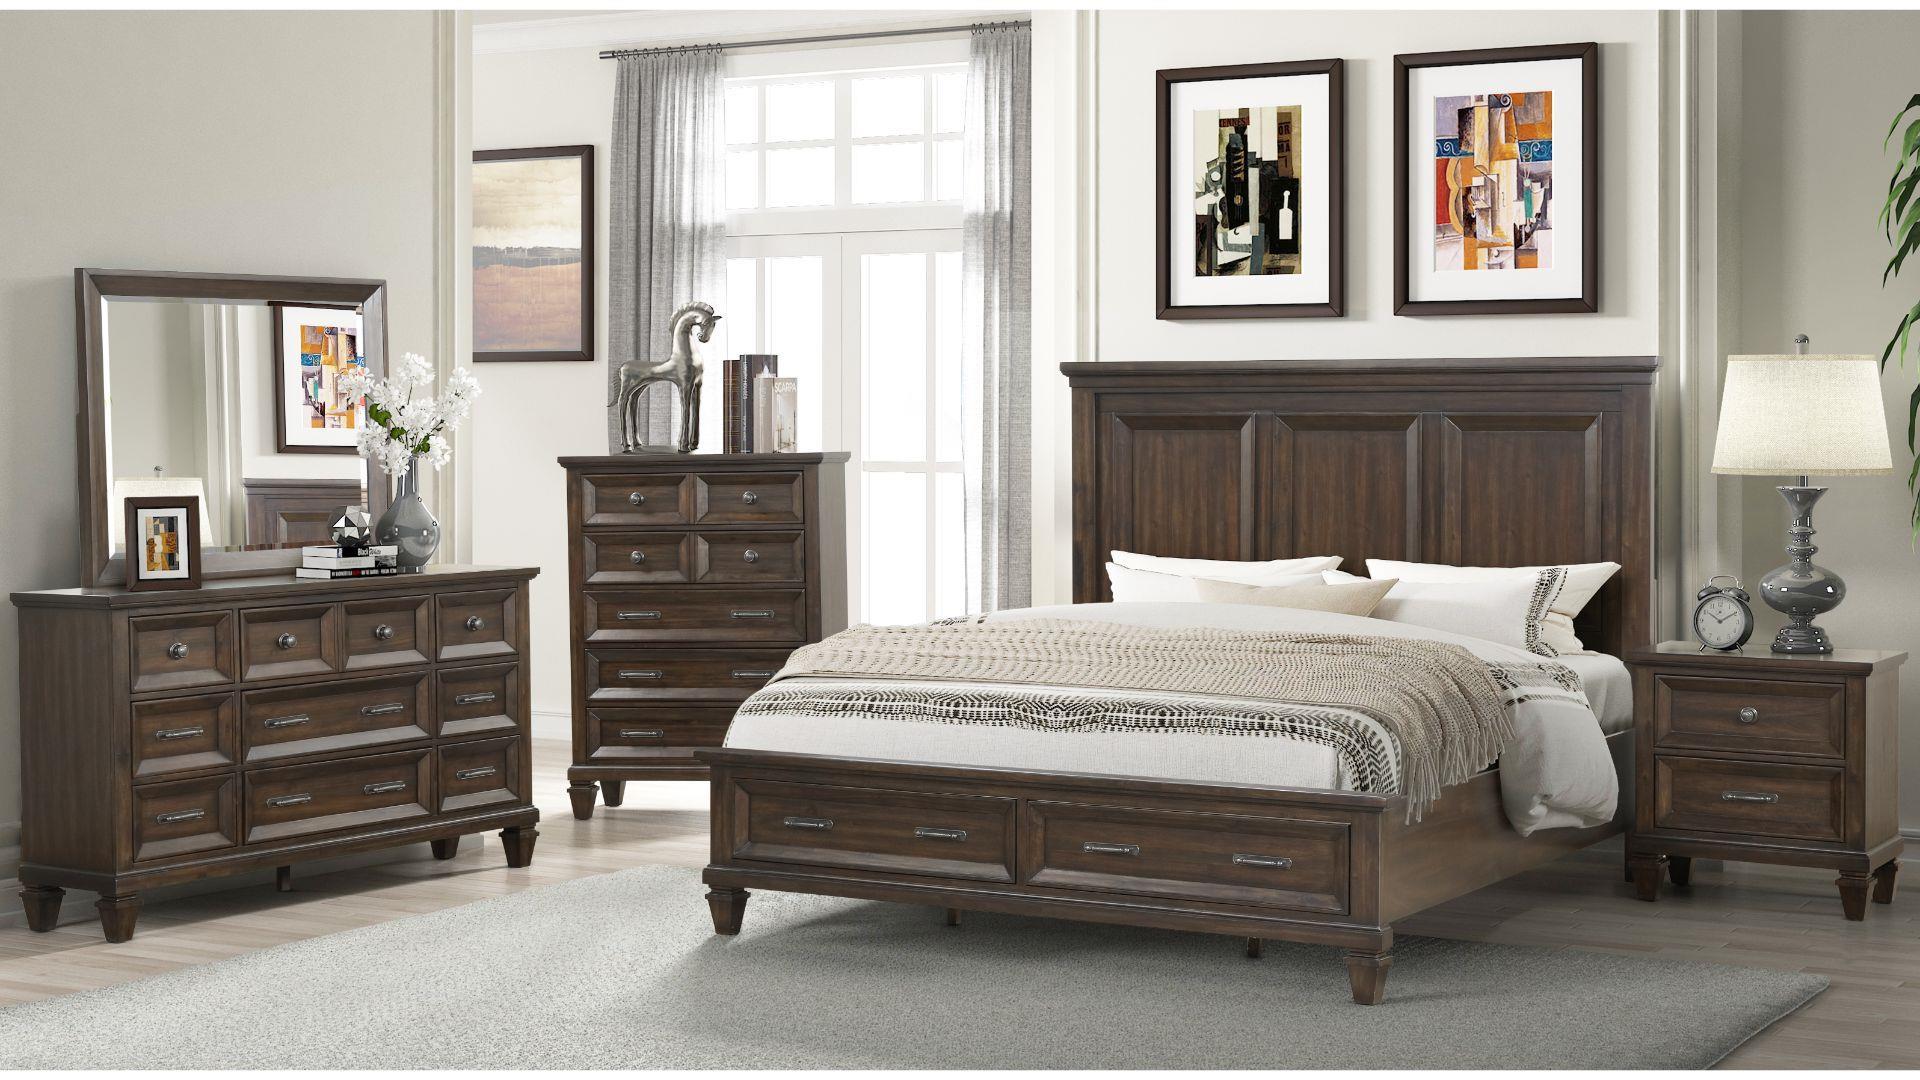 

    
Walnut Solid Wood Queen Bedroom Set 4P HAMILTON Galaxy Home Classic Traditional
